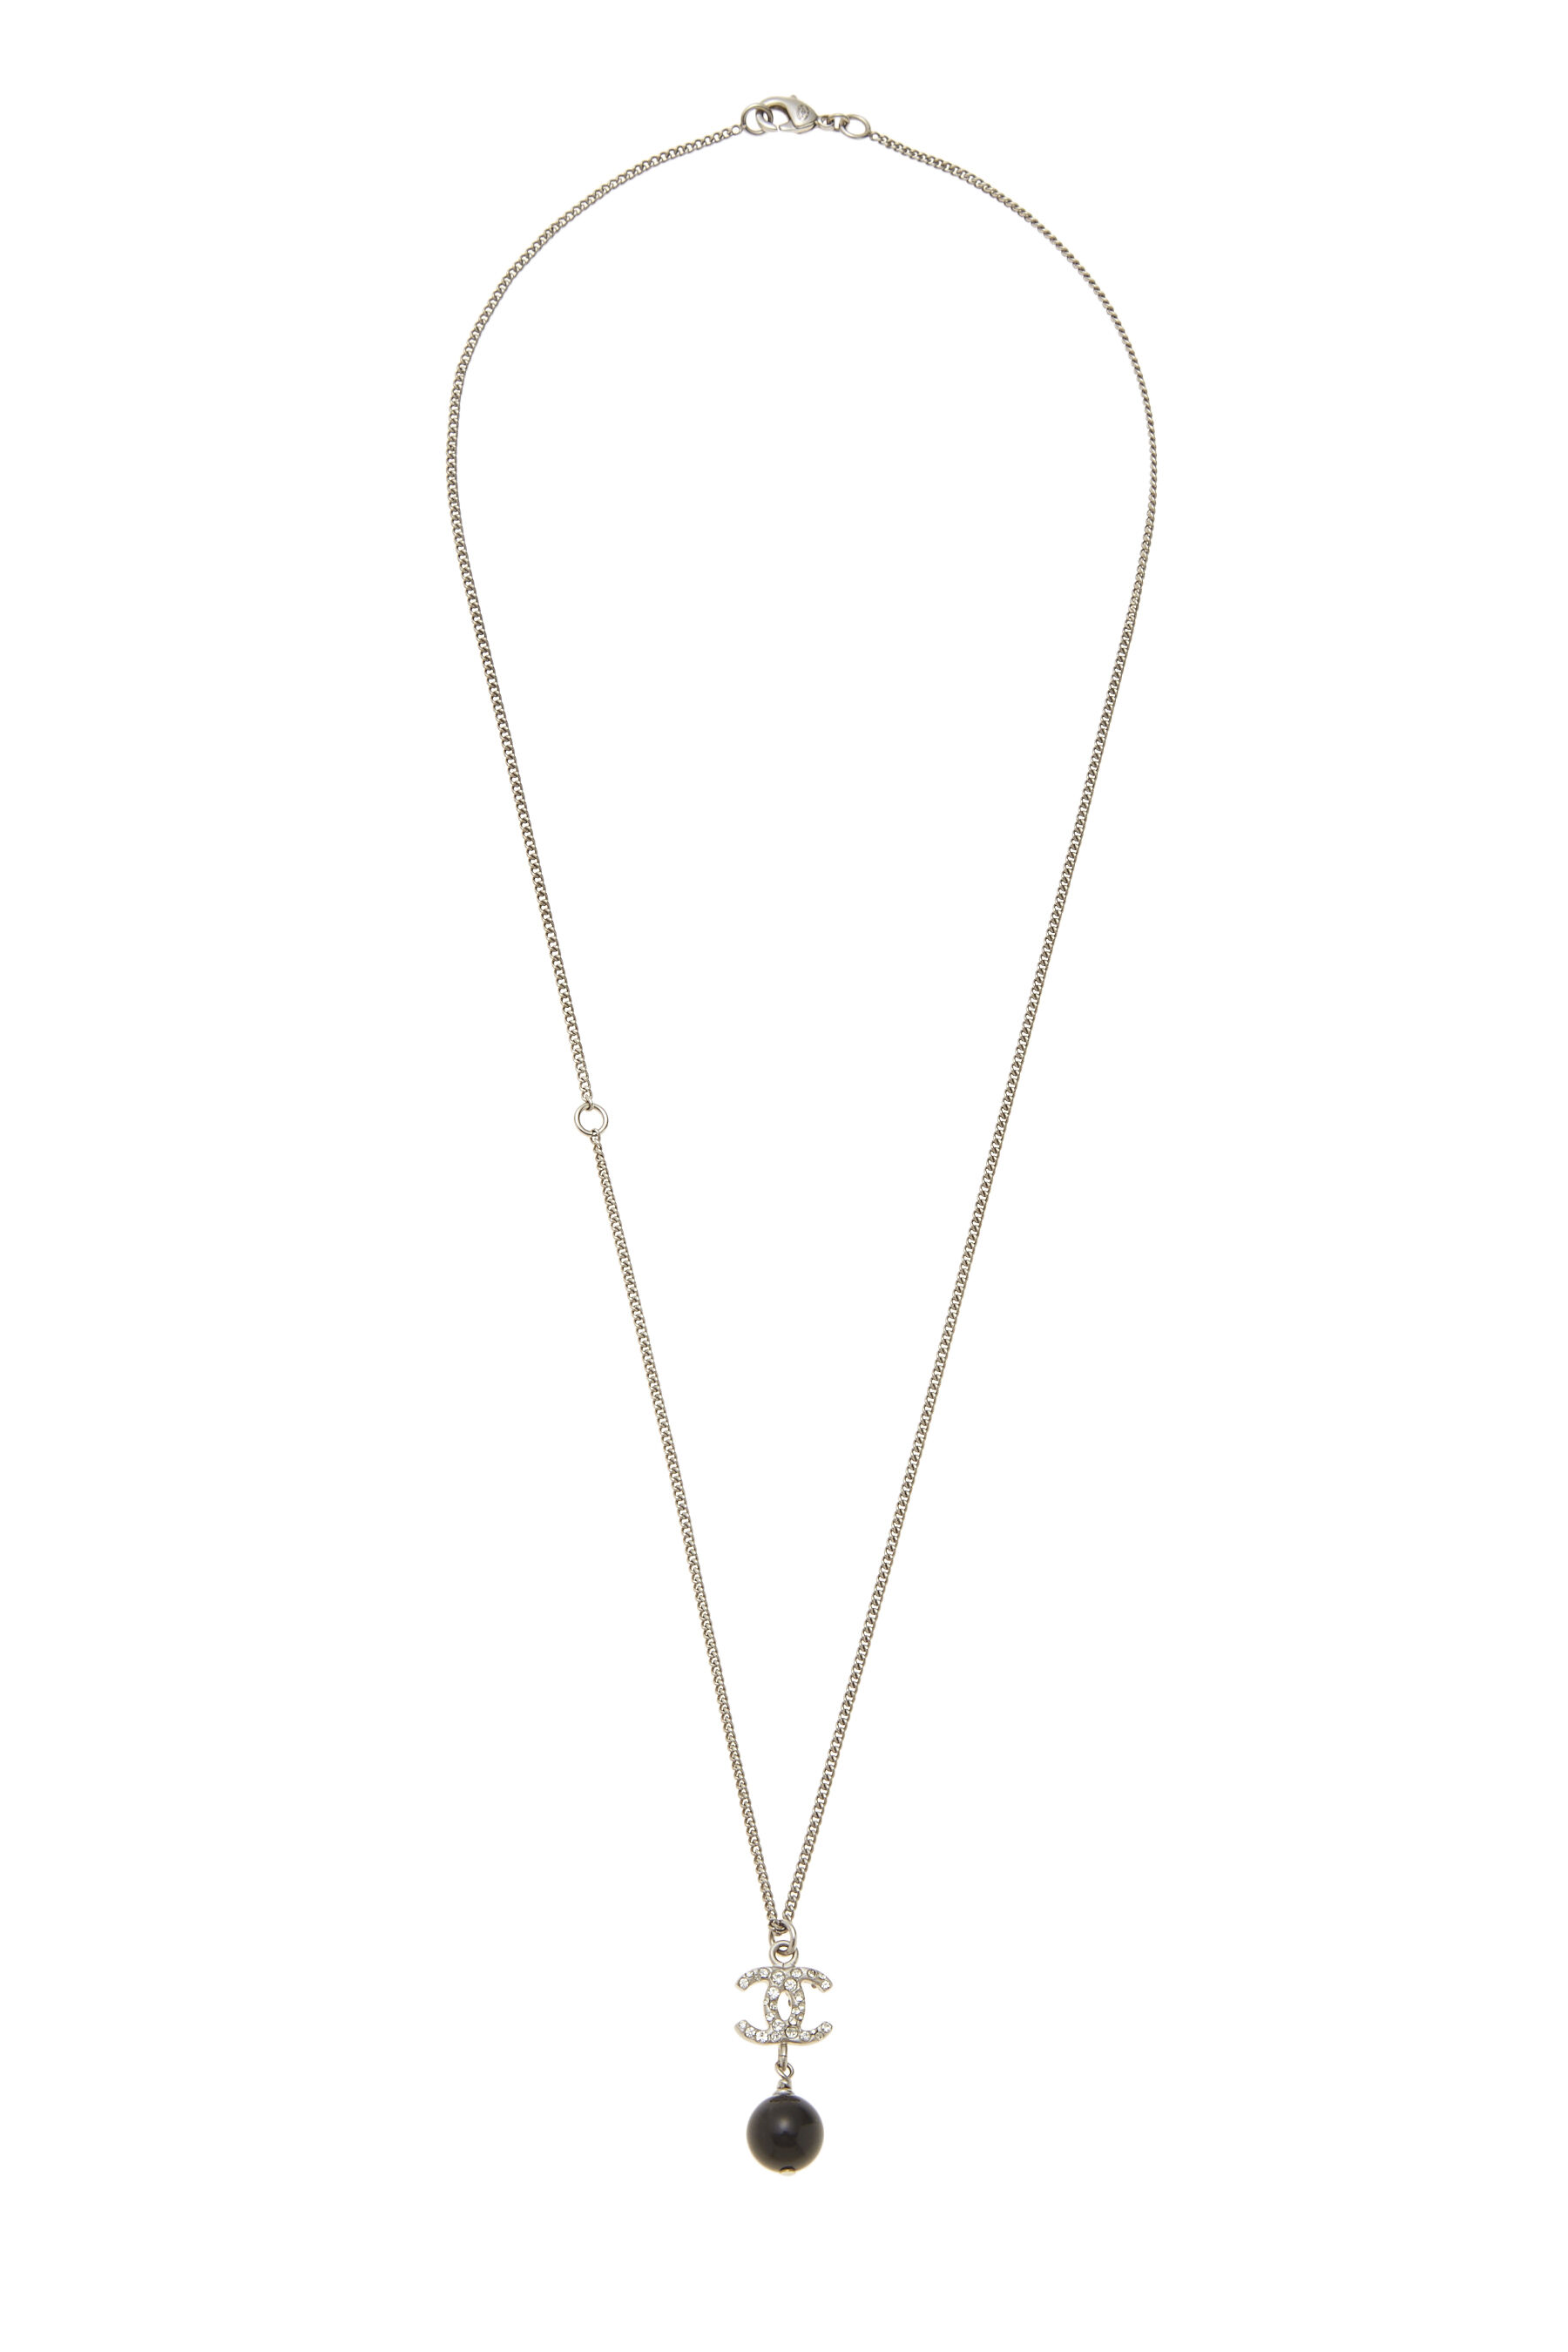 Chanel - Silver Crystal & Black Bead 'CC' Necklace